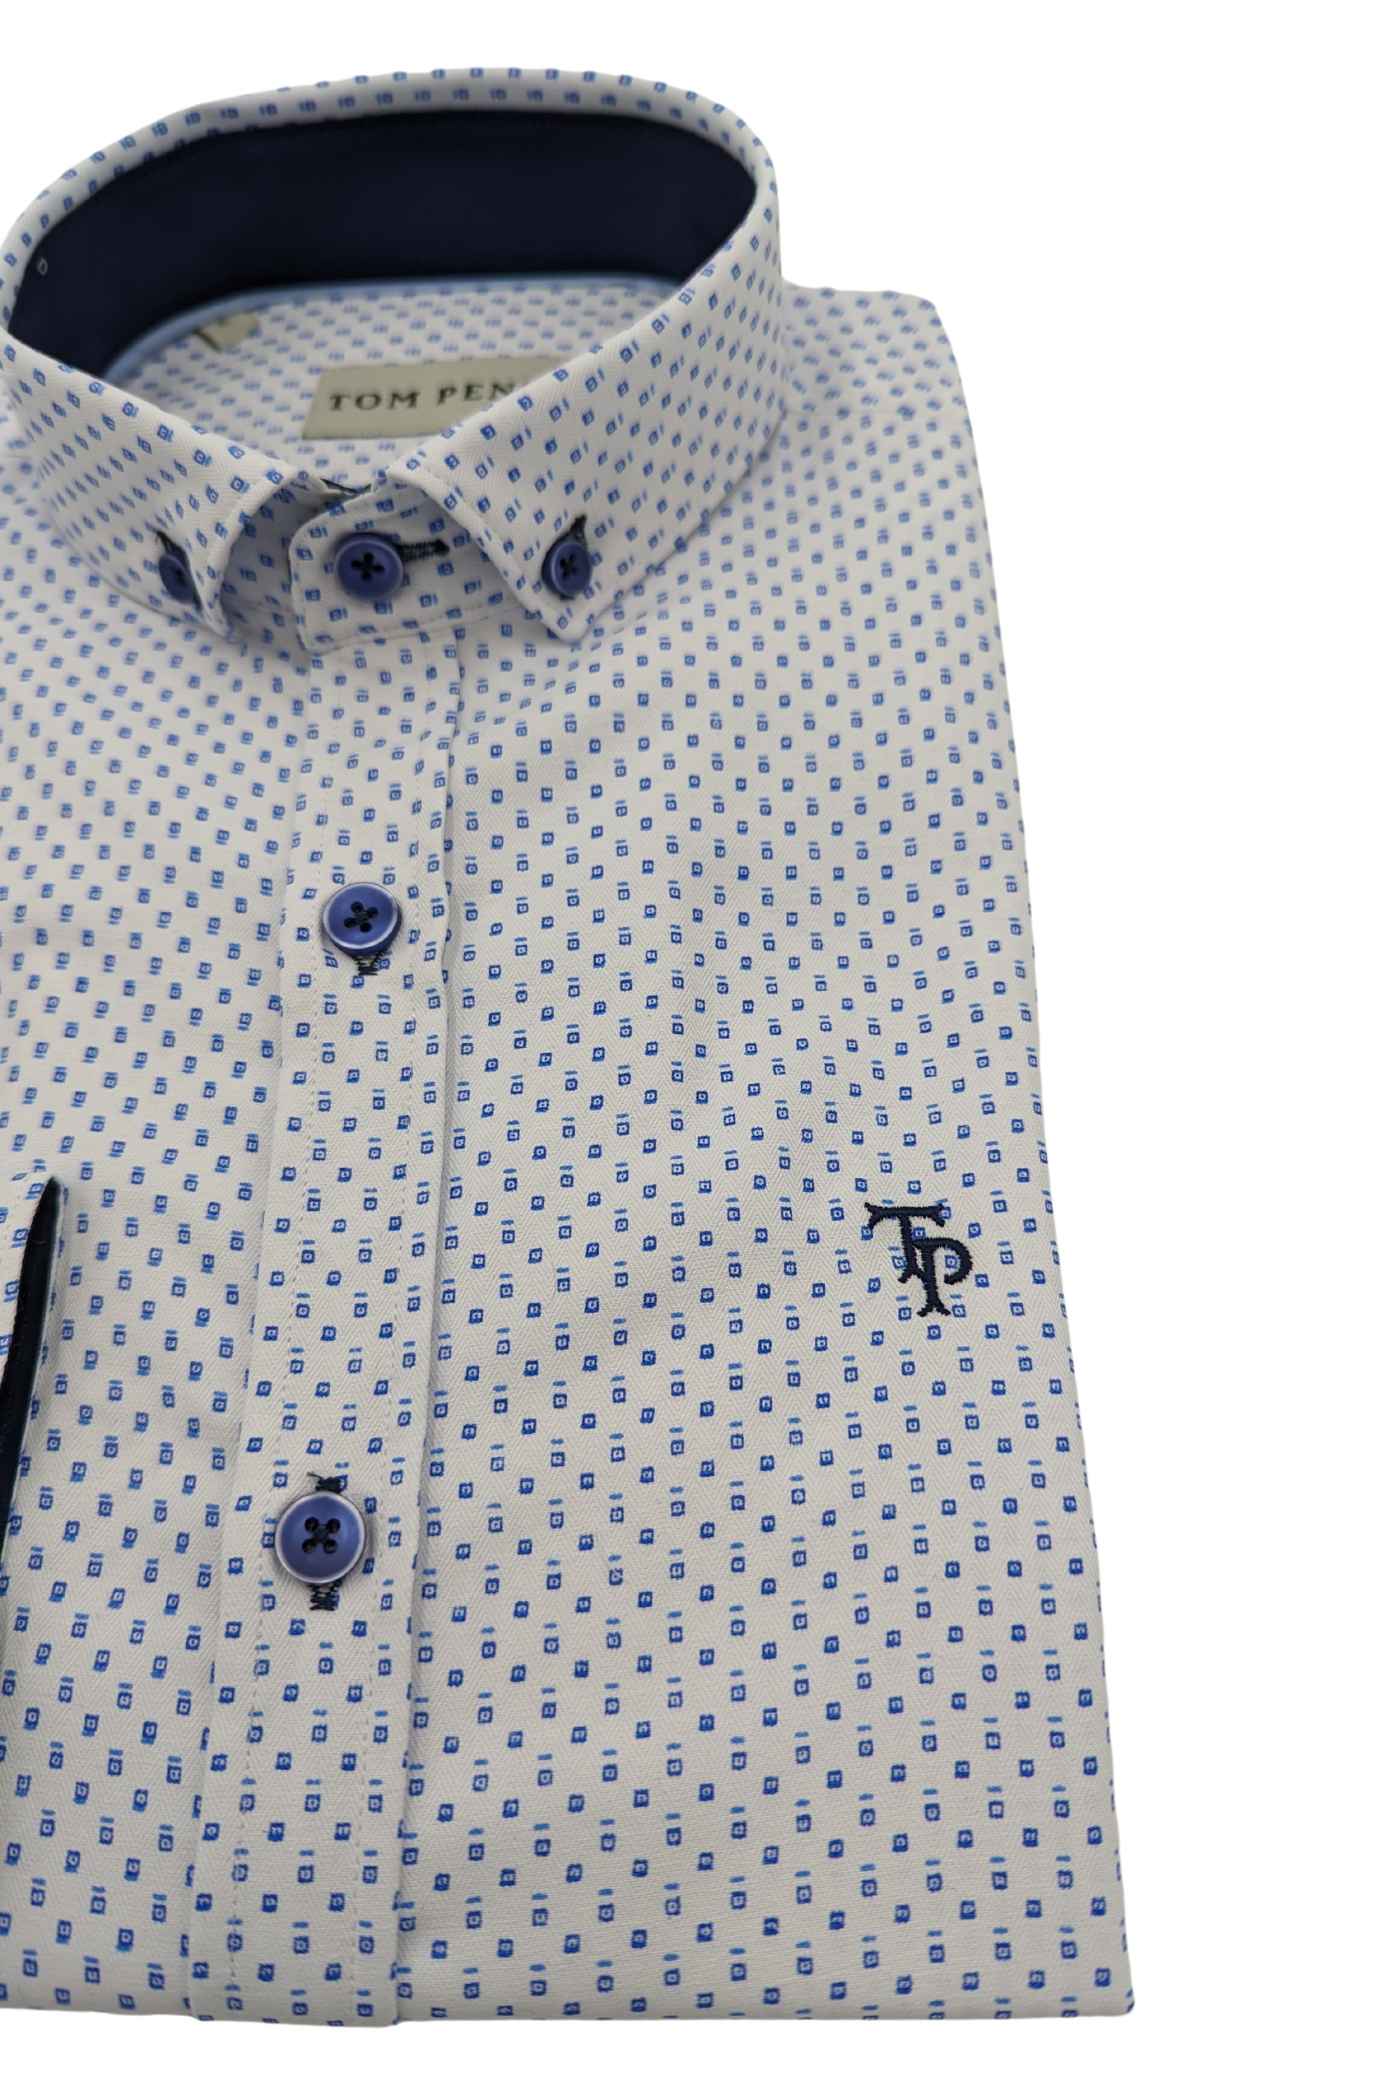 Tom Penn Long Sleeve White/Blue Shirt-Detail view